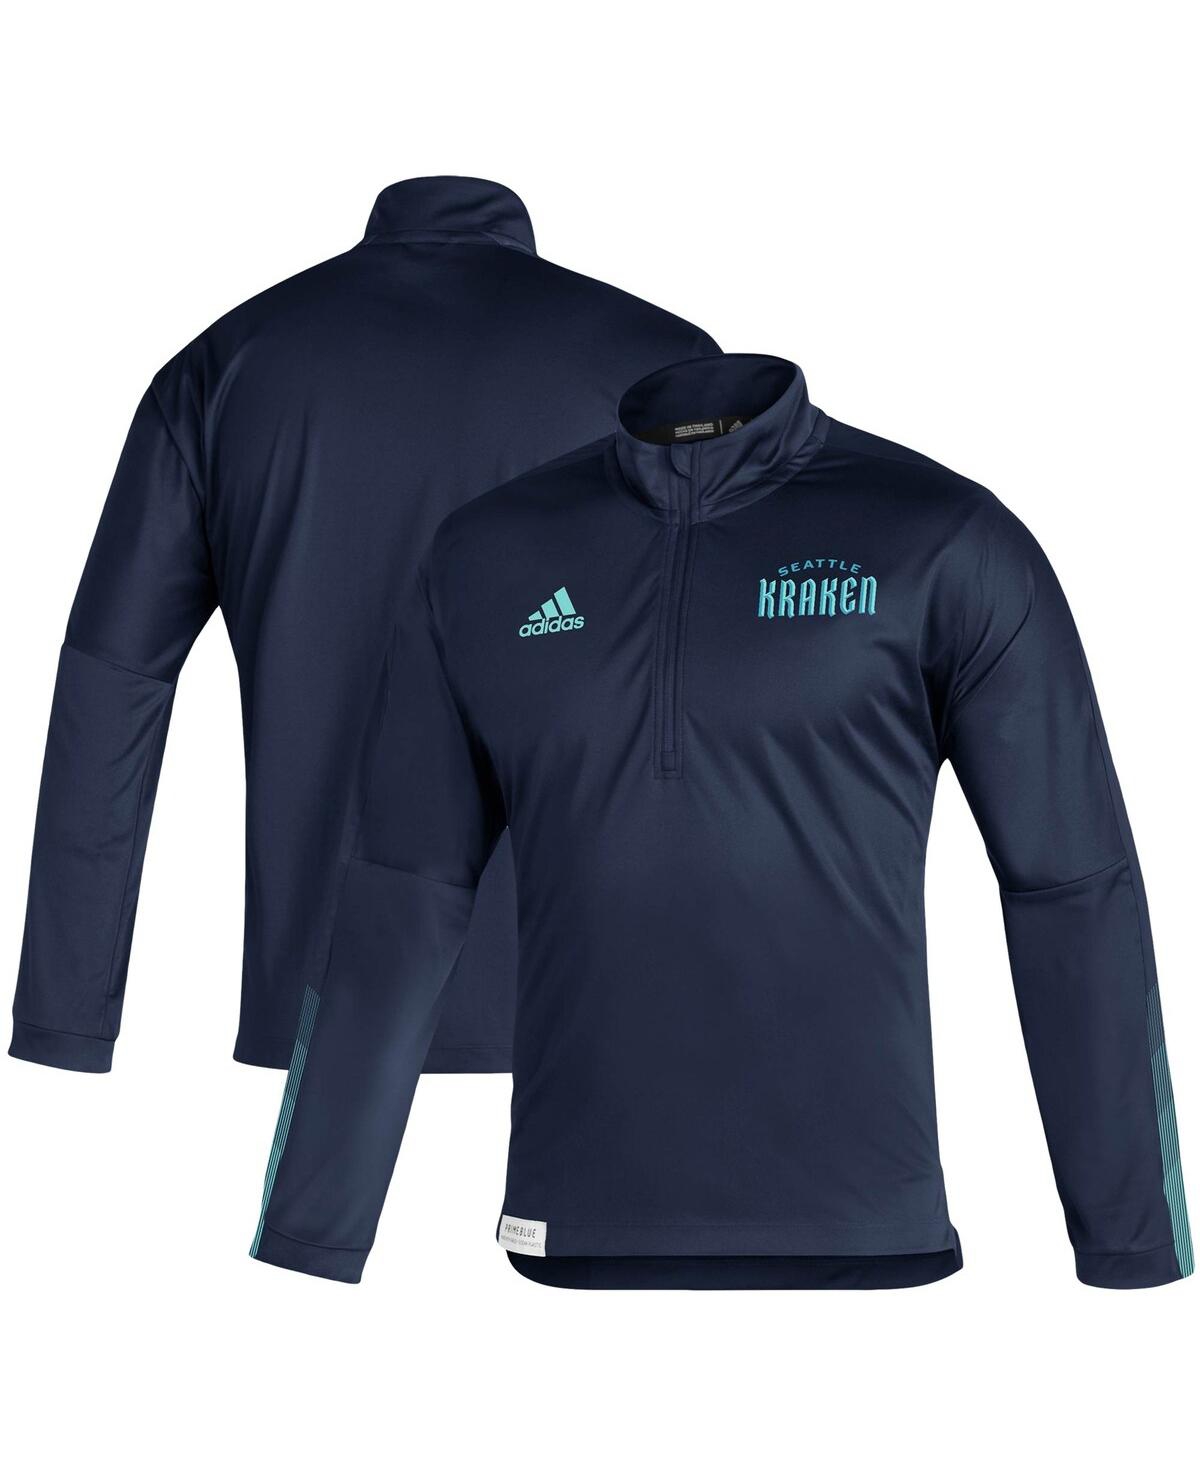 Shop Adidas Originals Men's Adidas Deep Sea Blue Seattle Kraken Quarter-zip Jacket